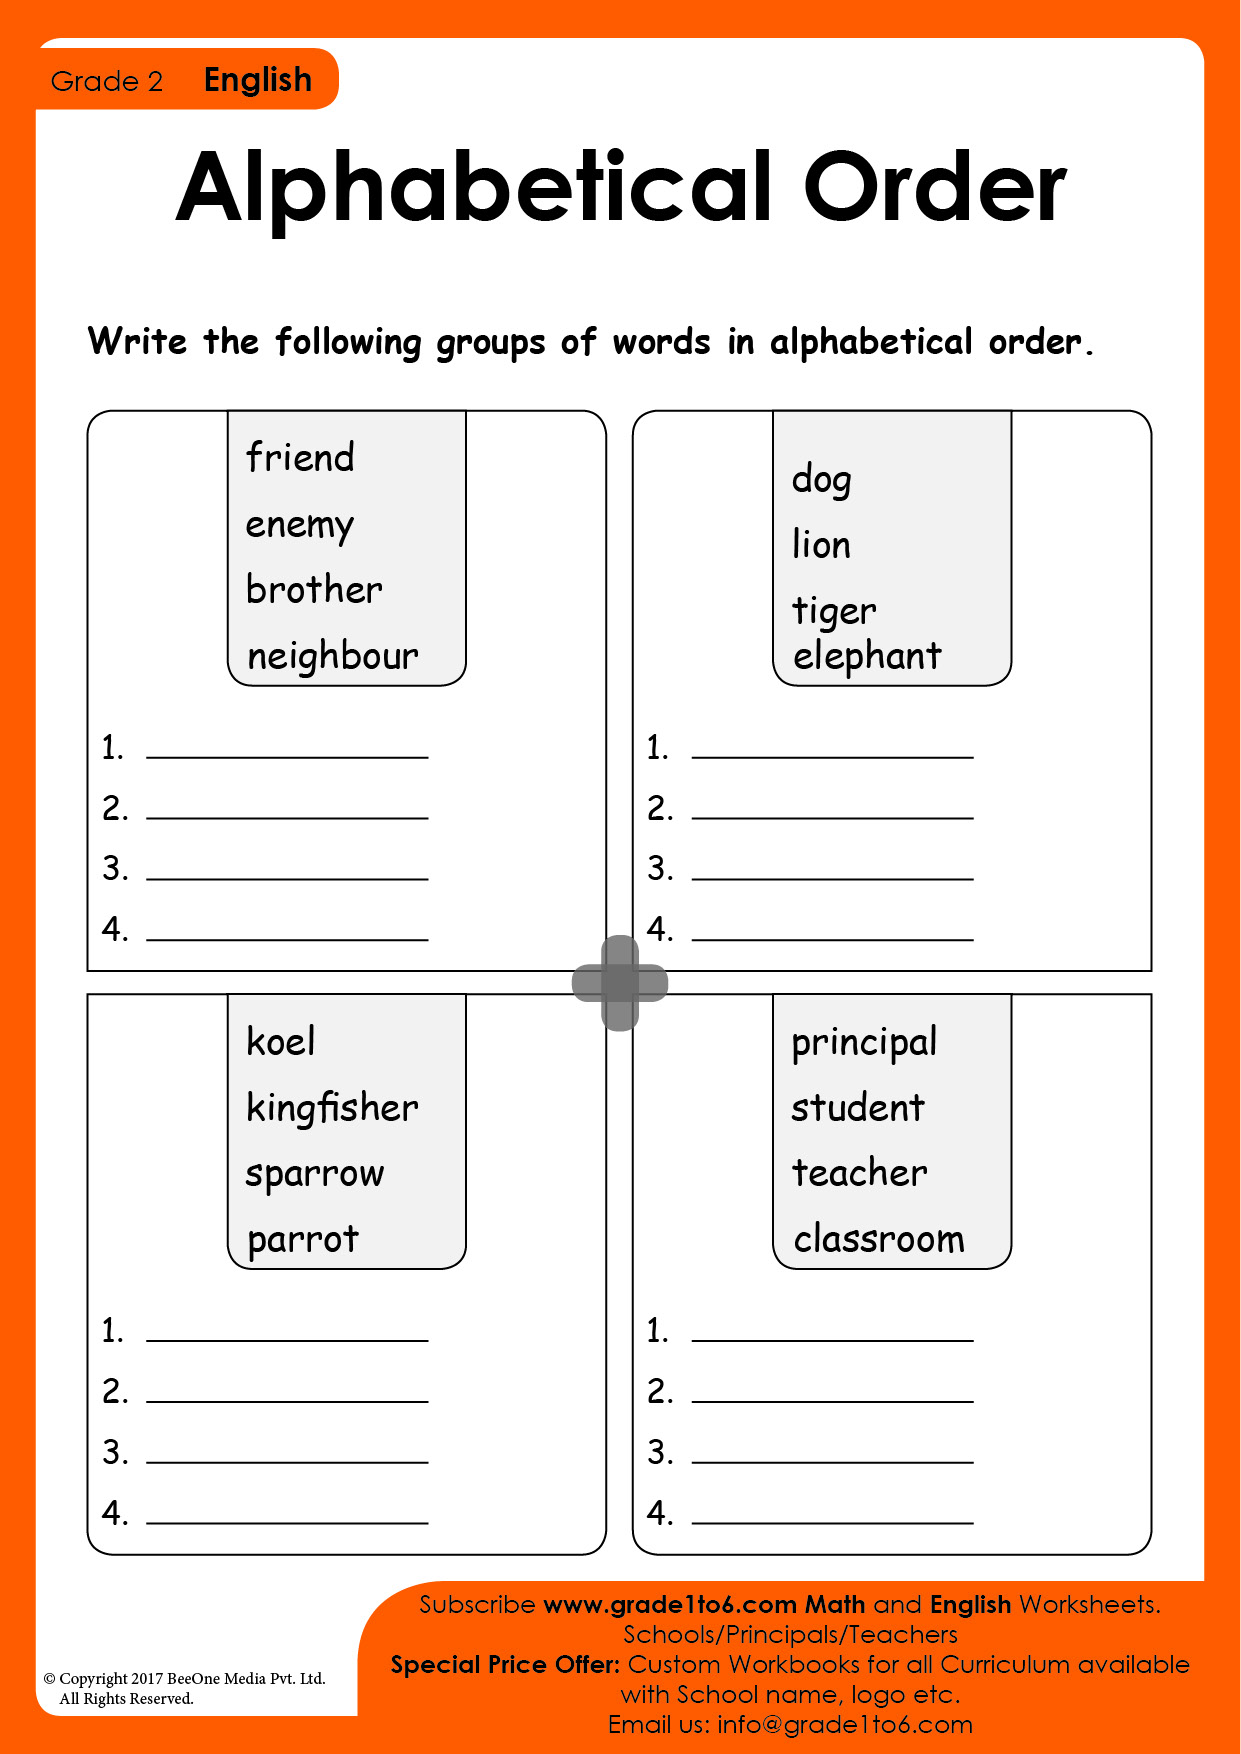 alphabetical-order-worksheets-grade1to6